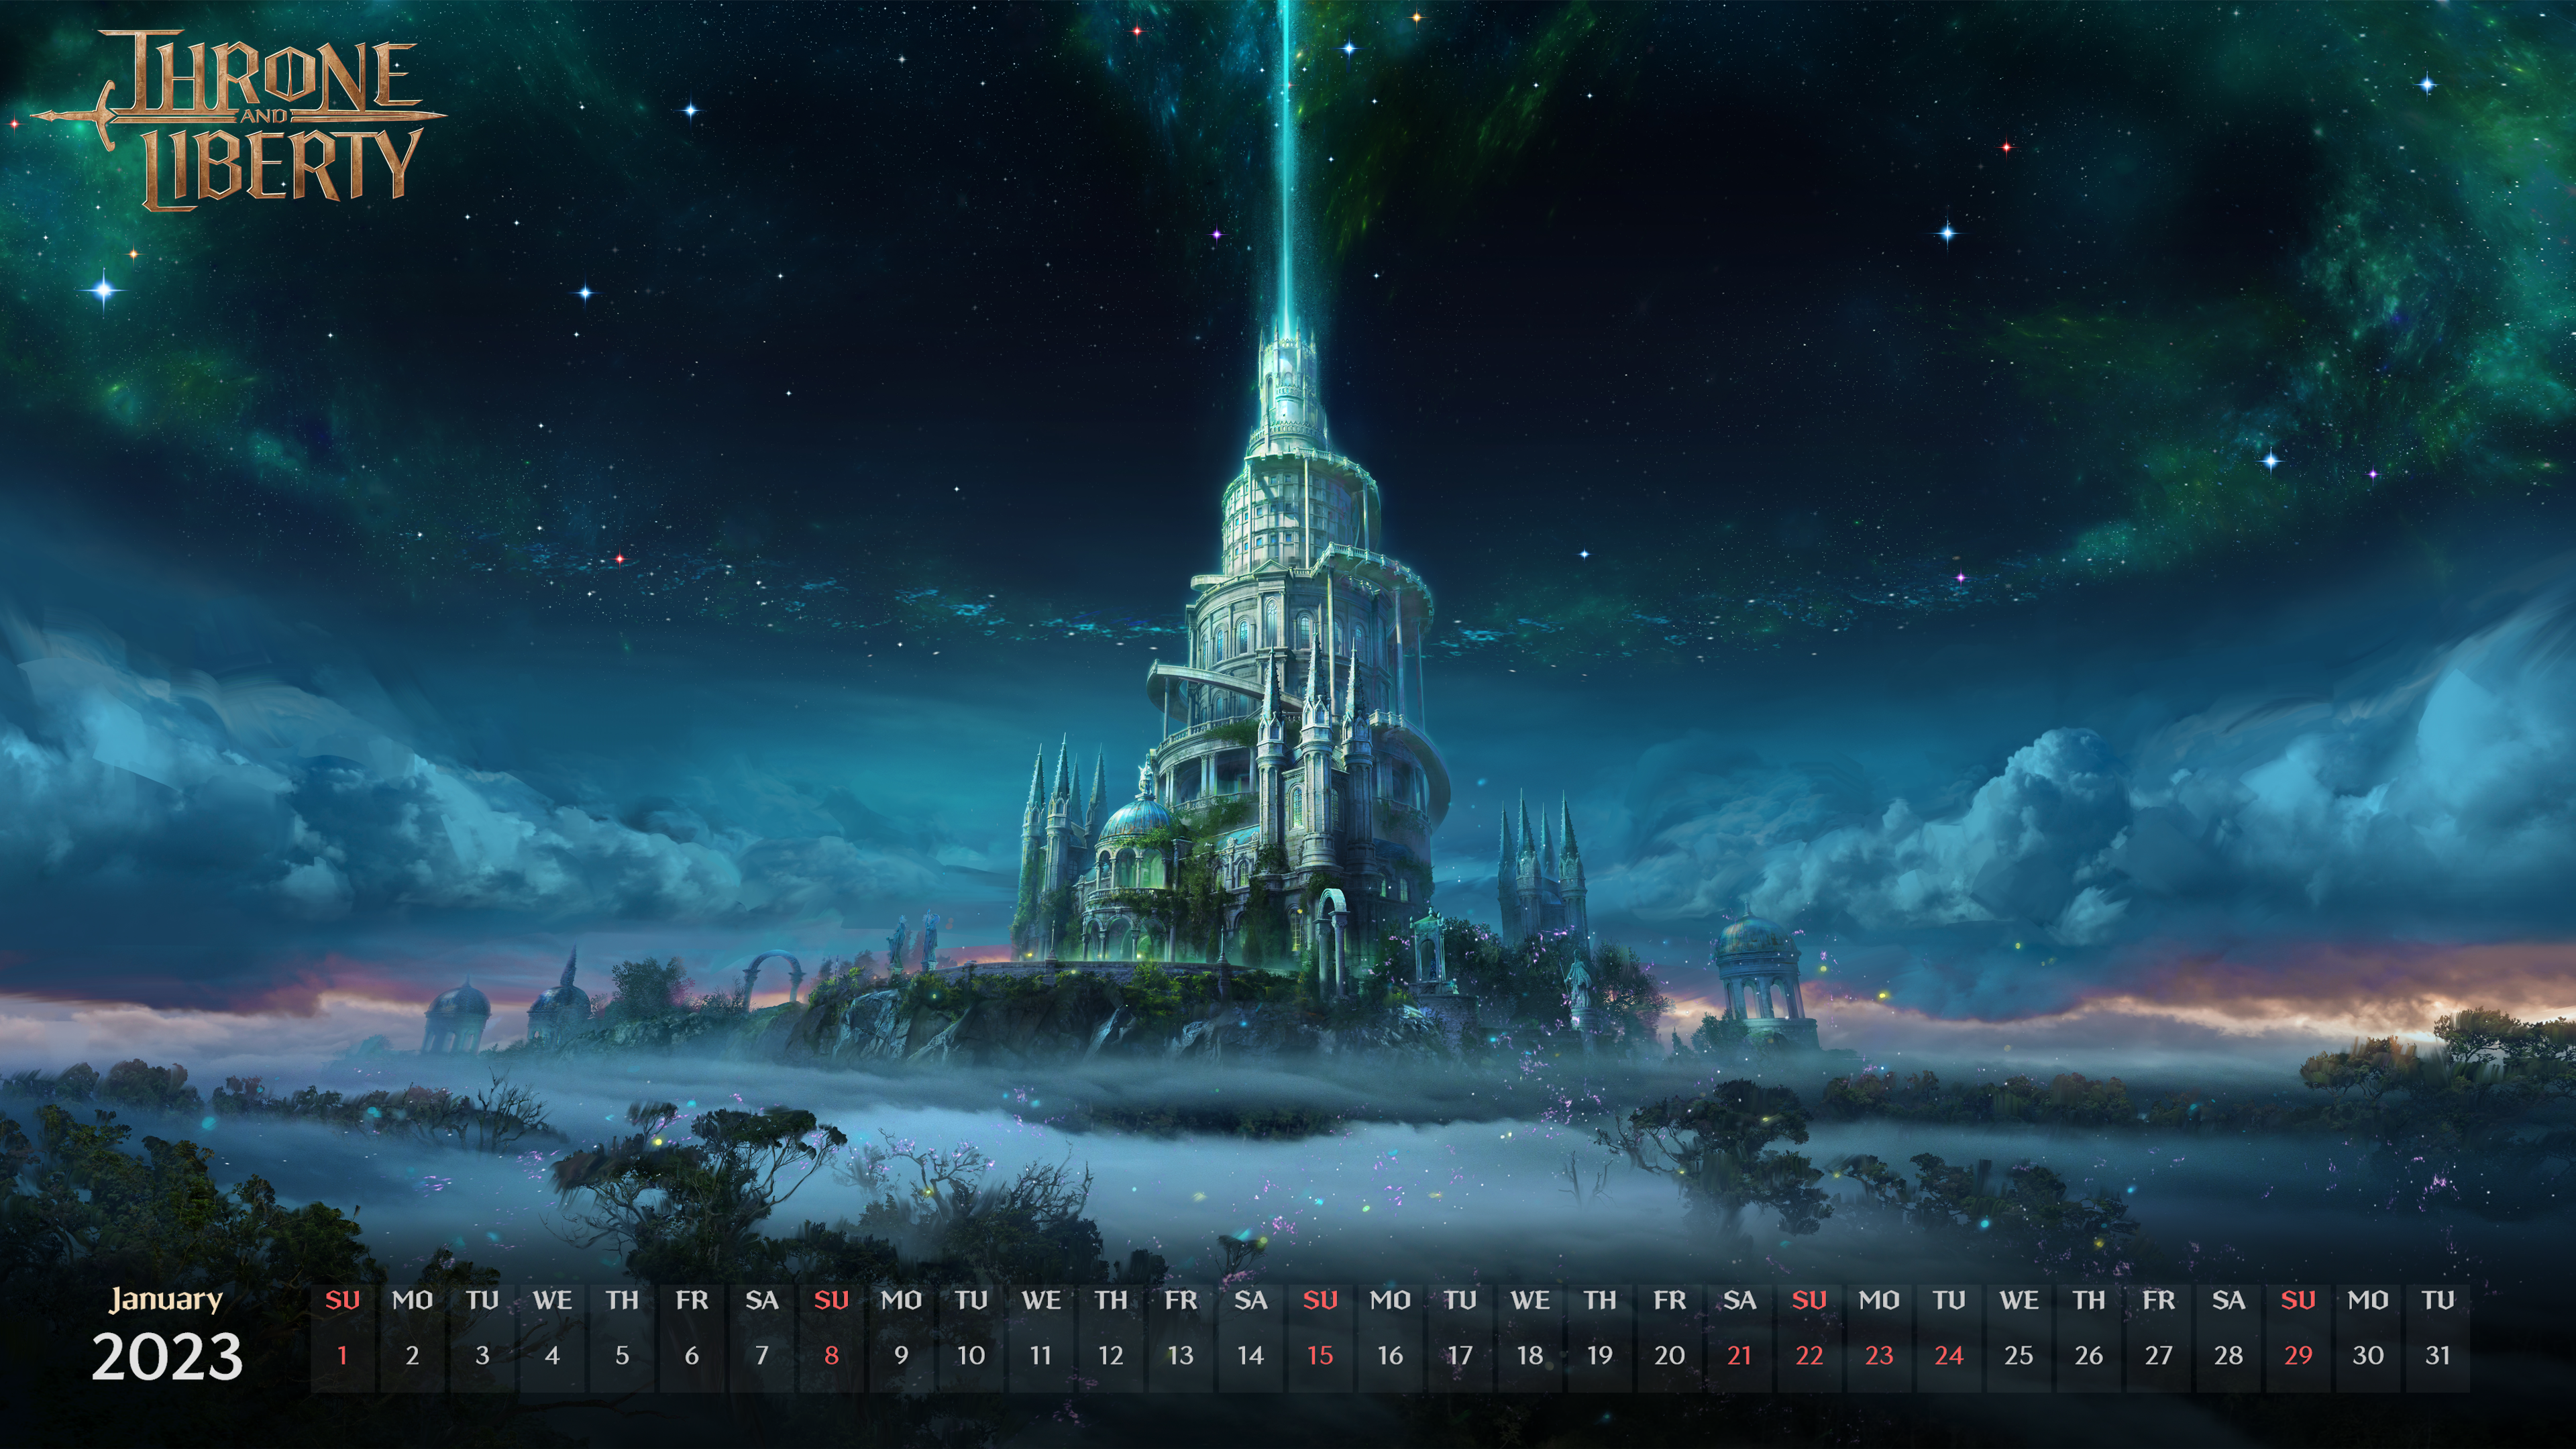 Throne and Liberty Calendar: January